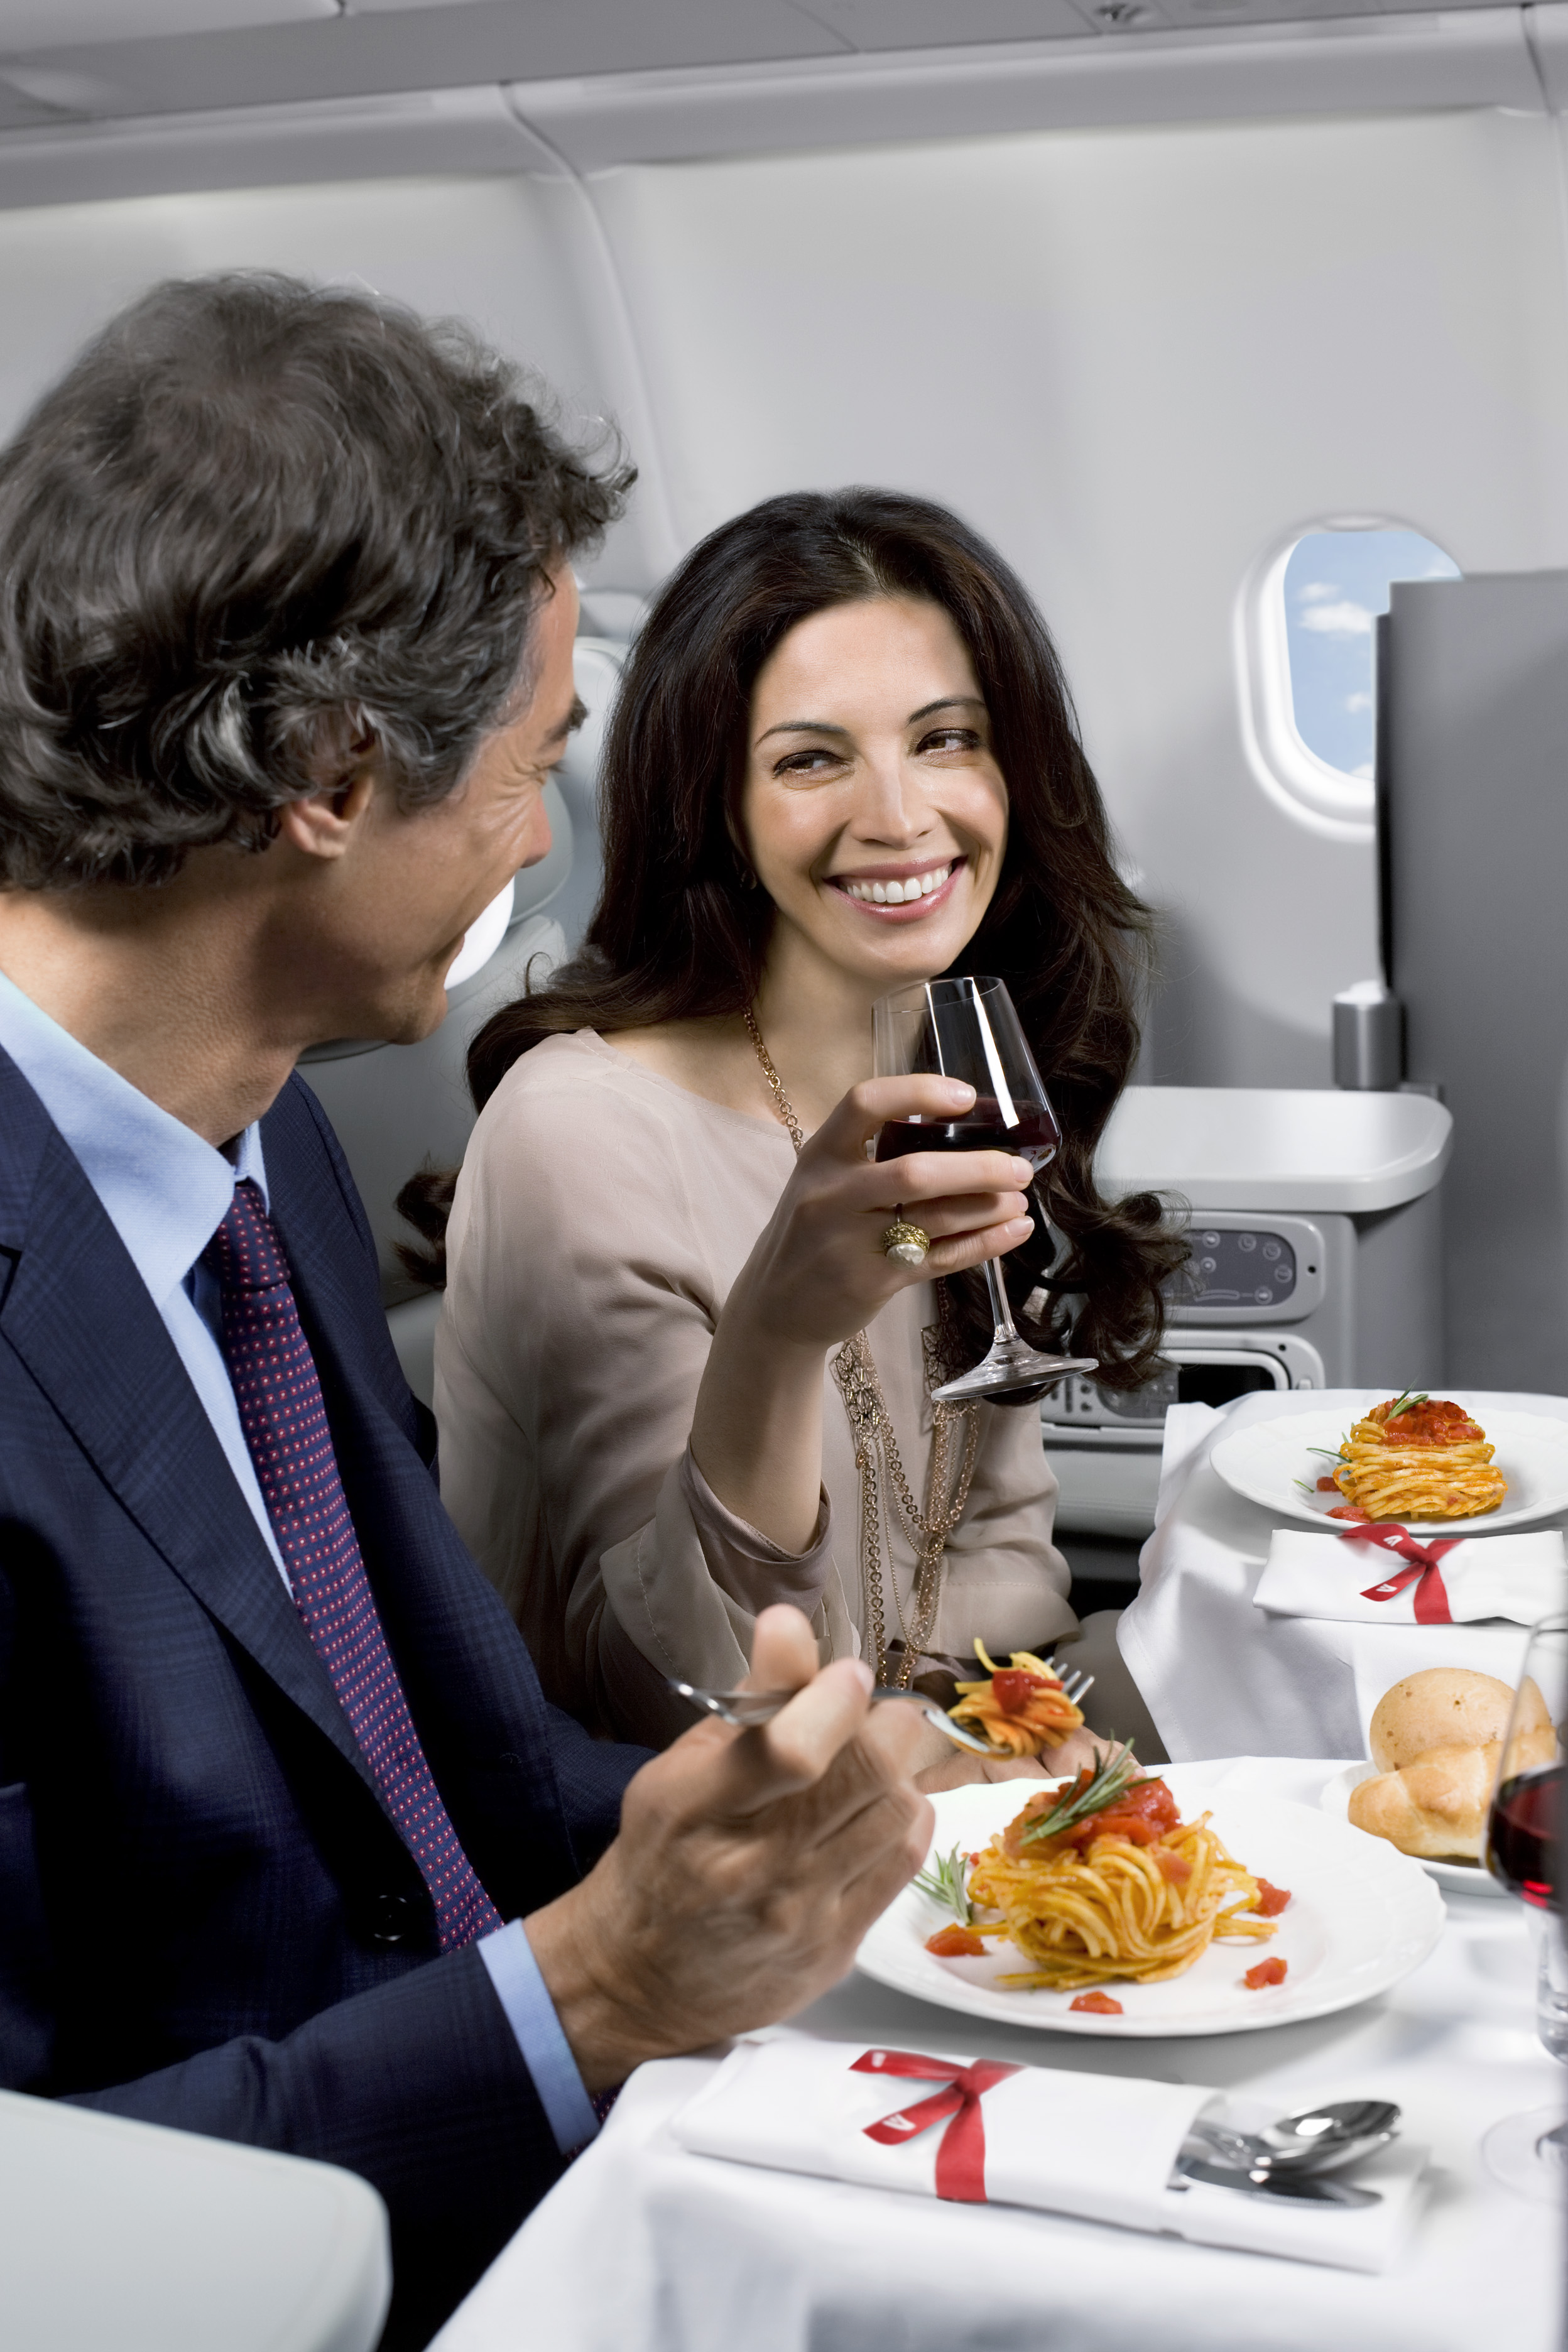 Alitalia per la 2° volta è “Best Airline Cuisine”